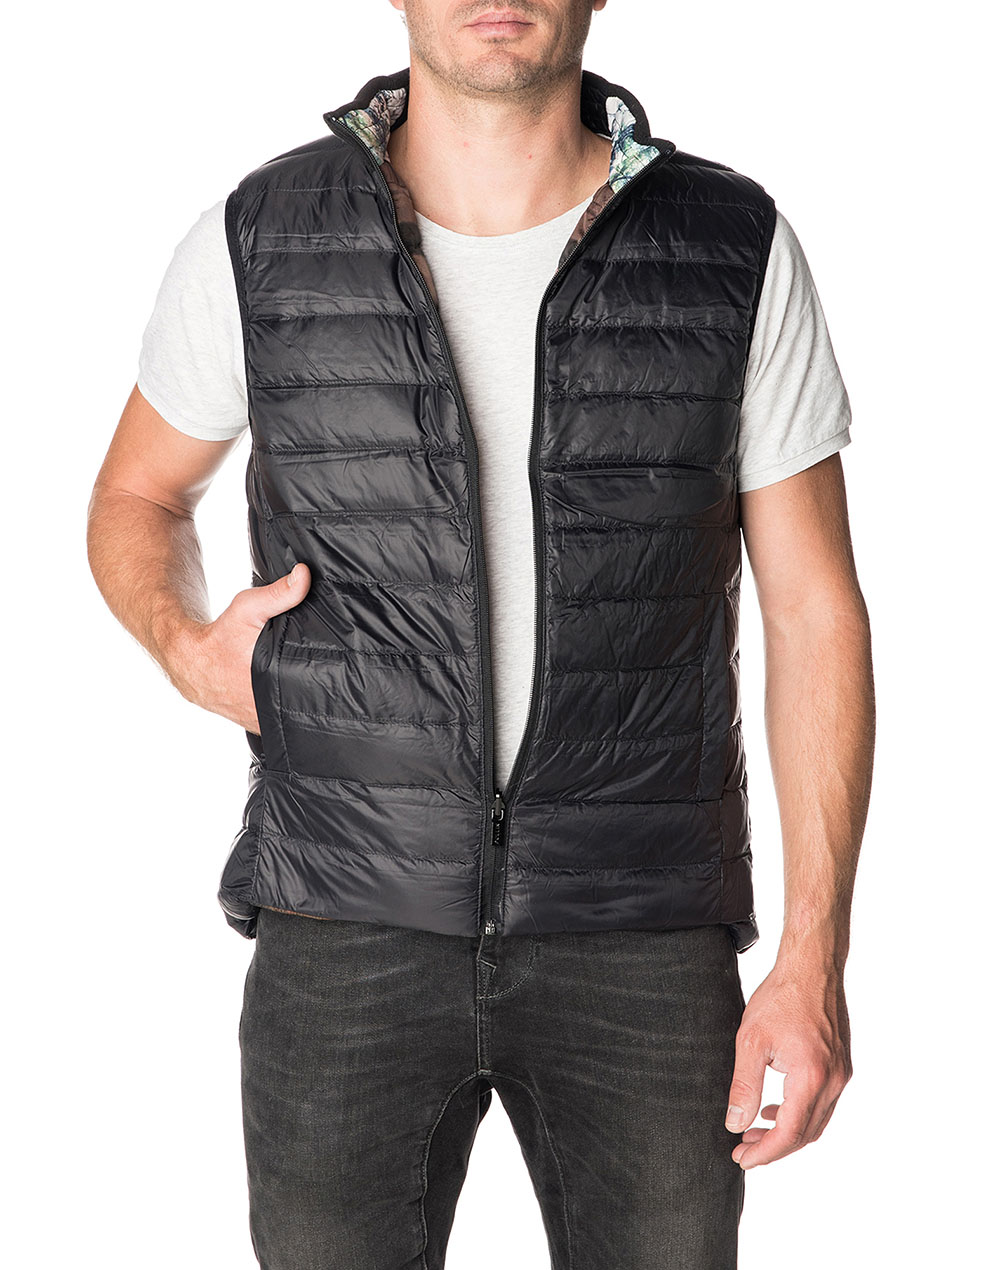 Men's feather jacket without sleeves BULLIT